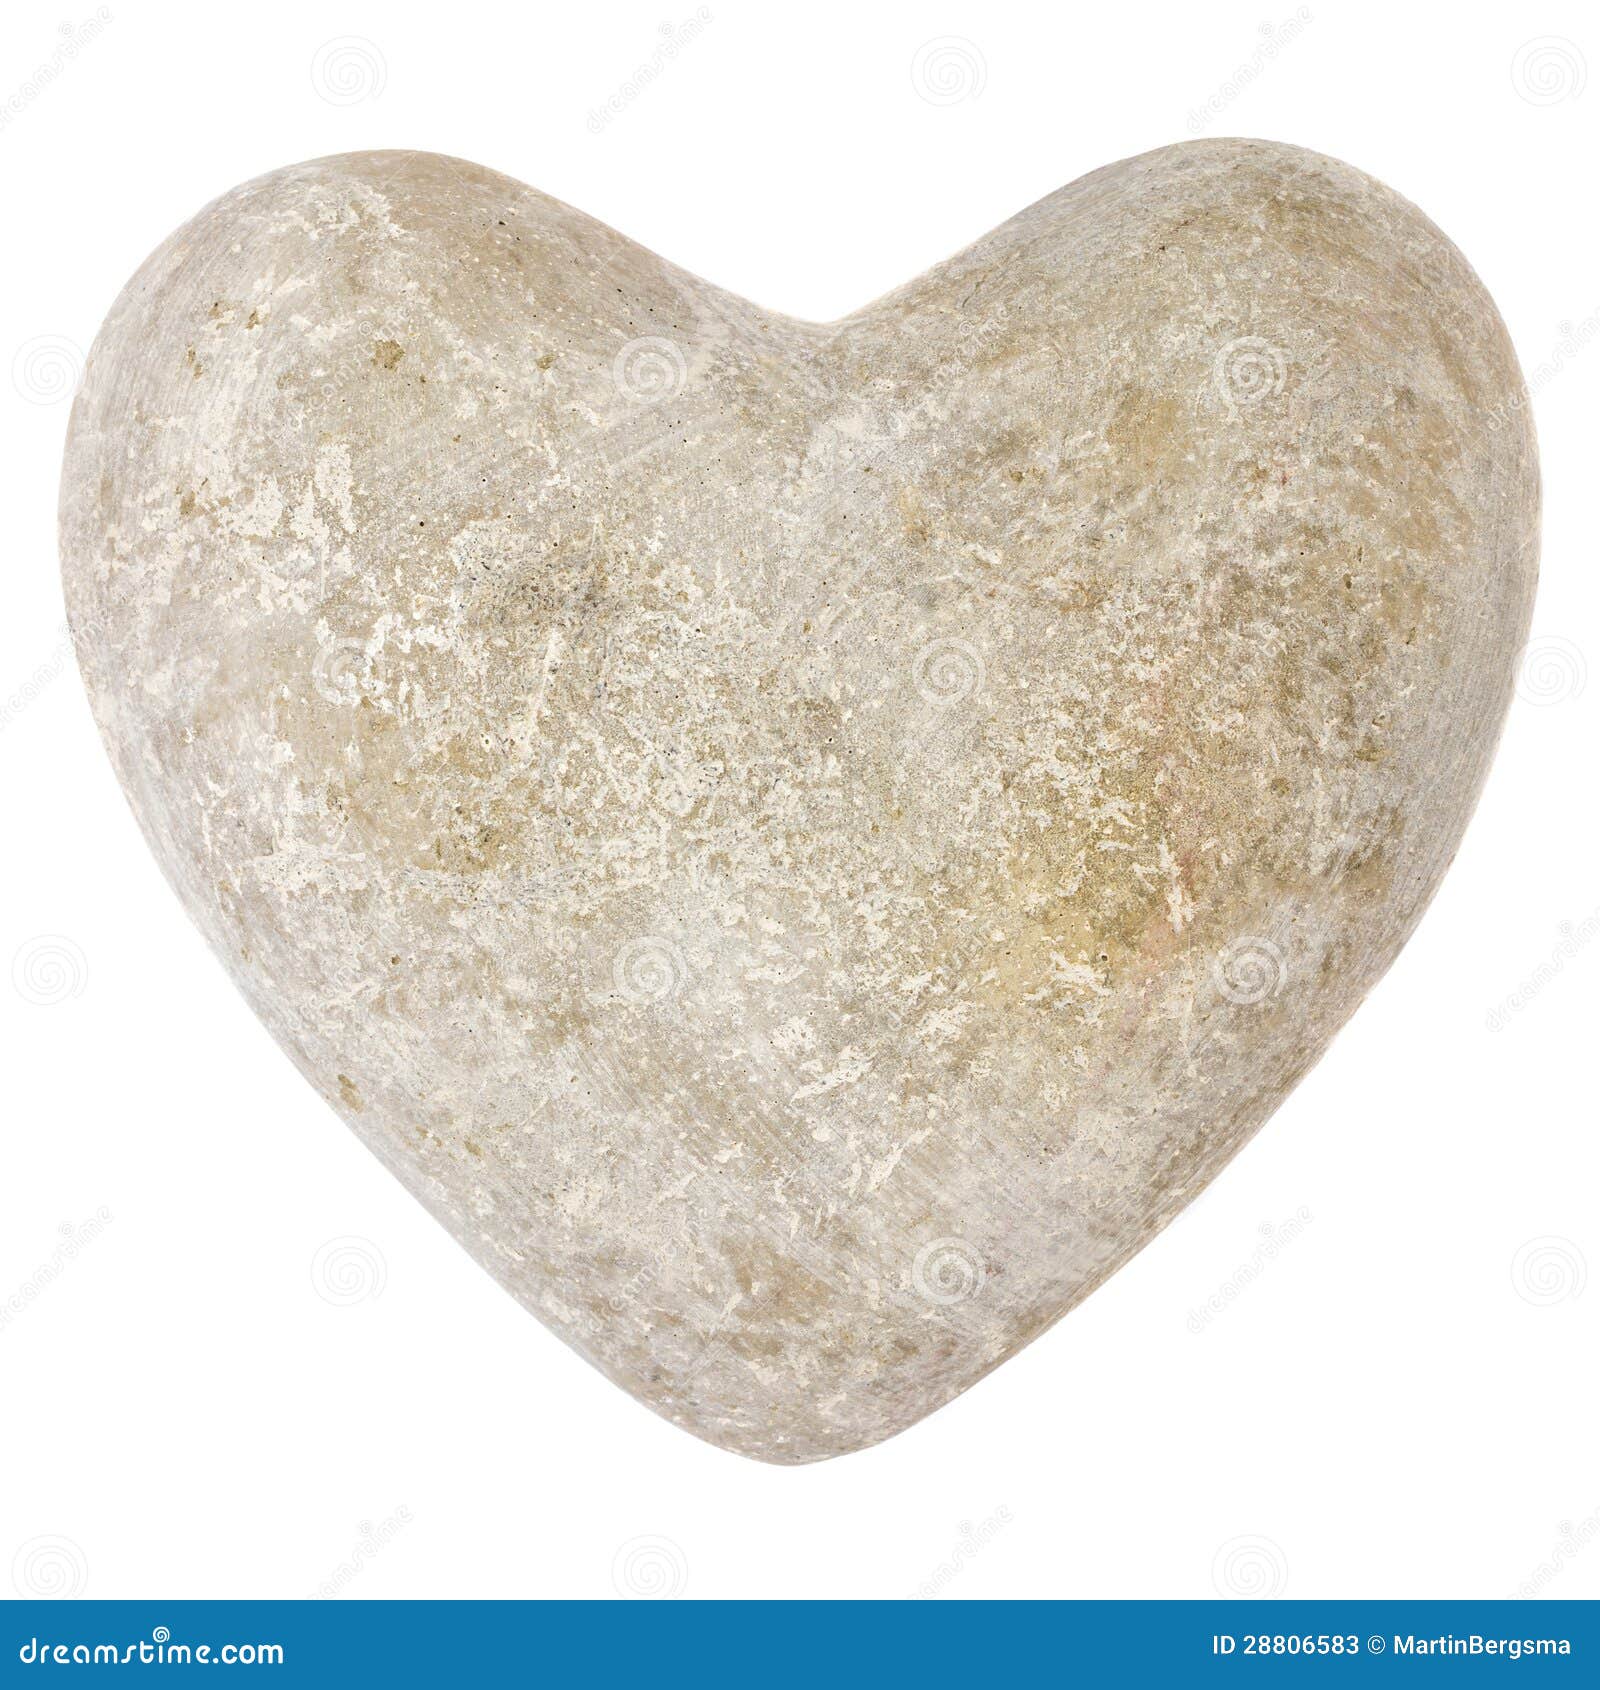 Stone shape. Камень в форме сердца. Камень Шейп. Сердце Стоун 2023. Heart Shaped Stone.